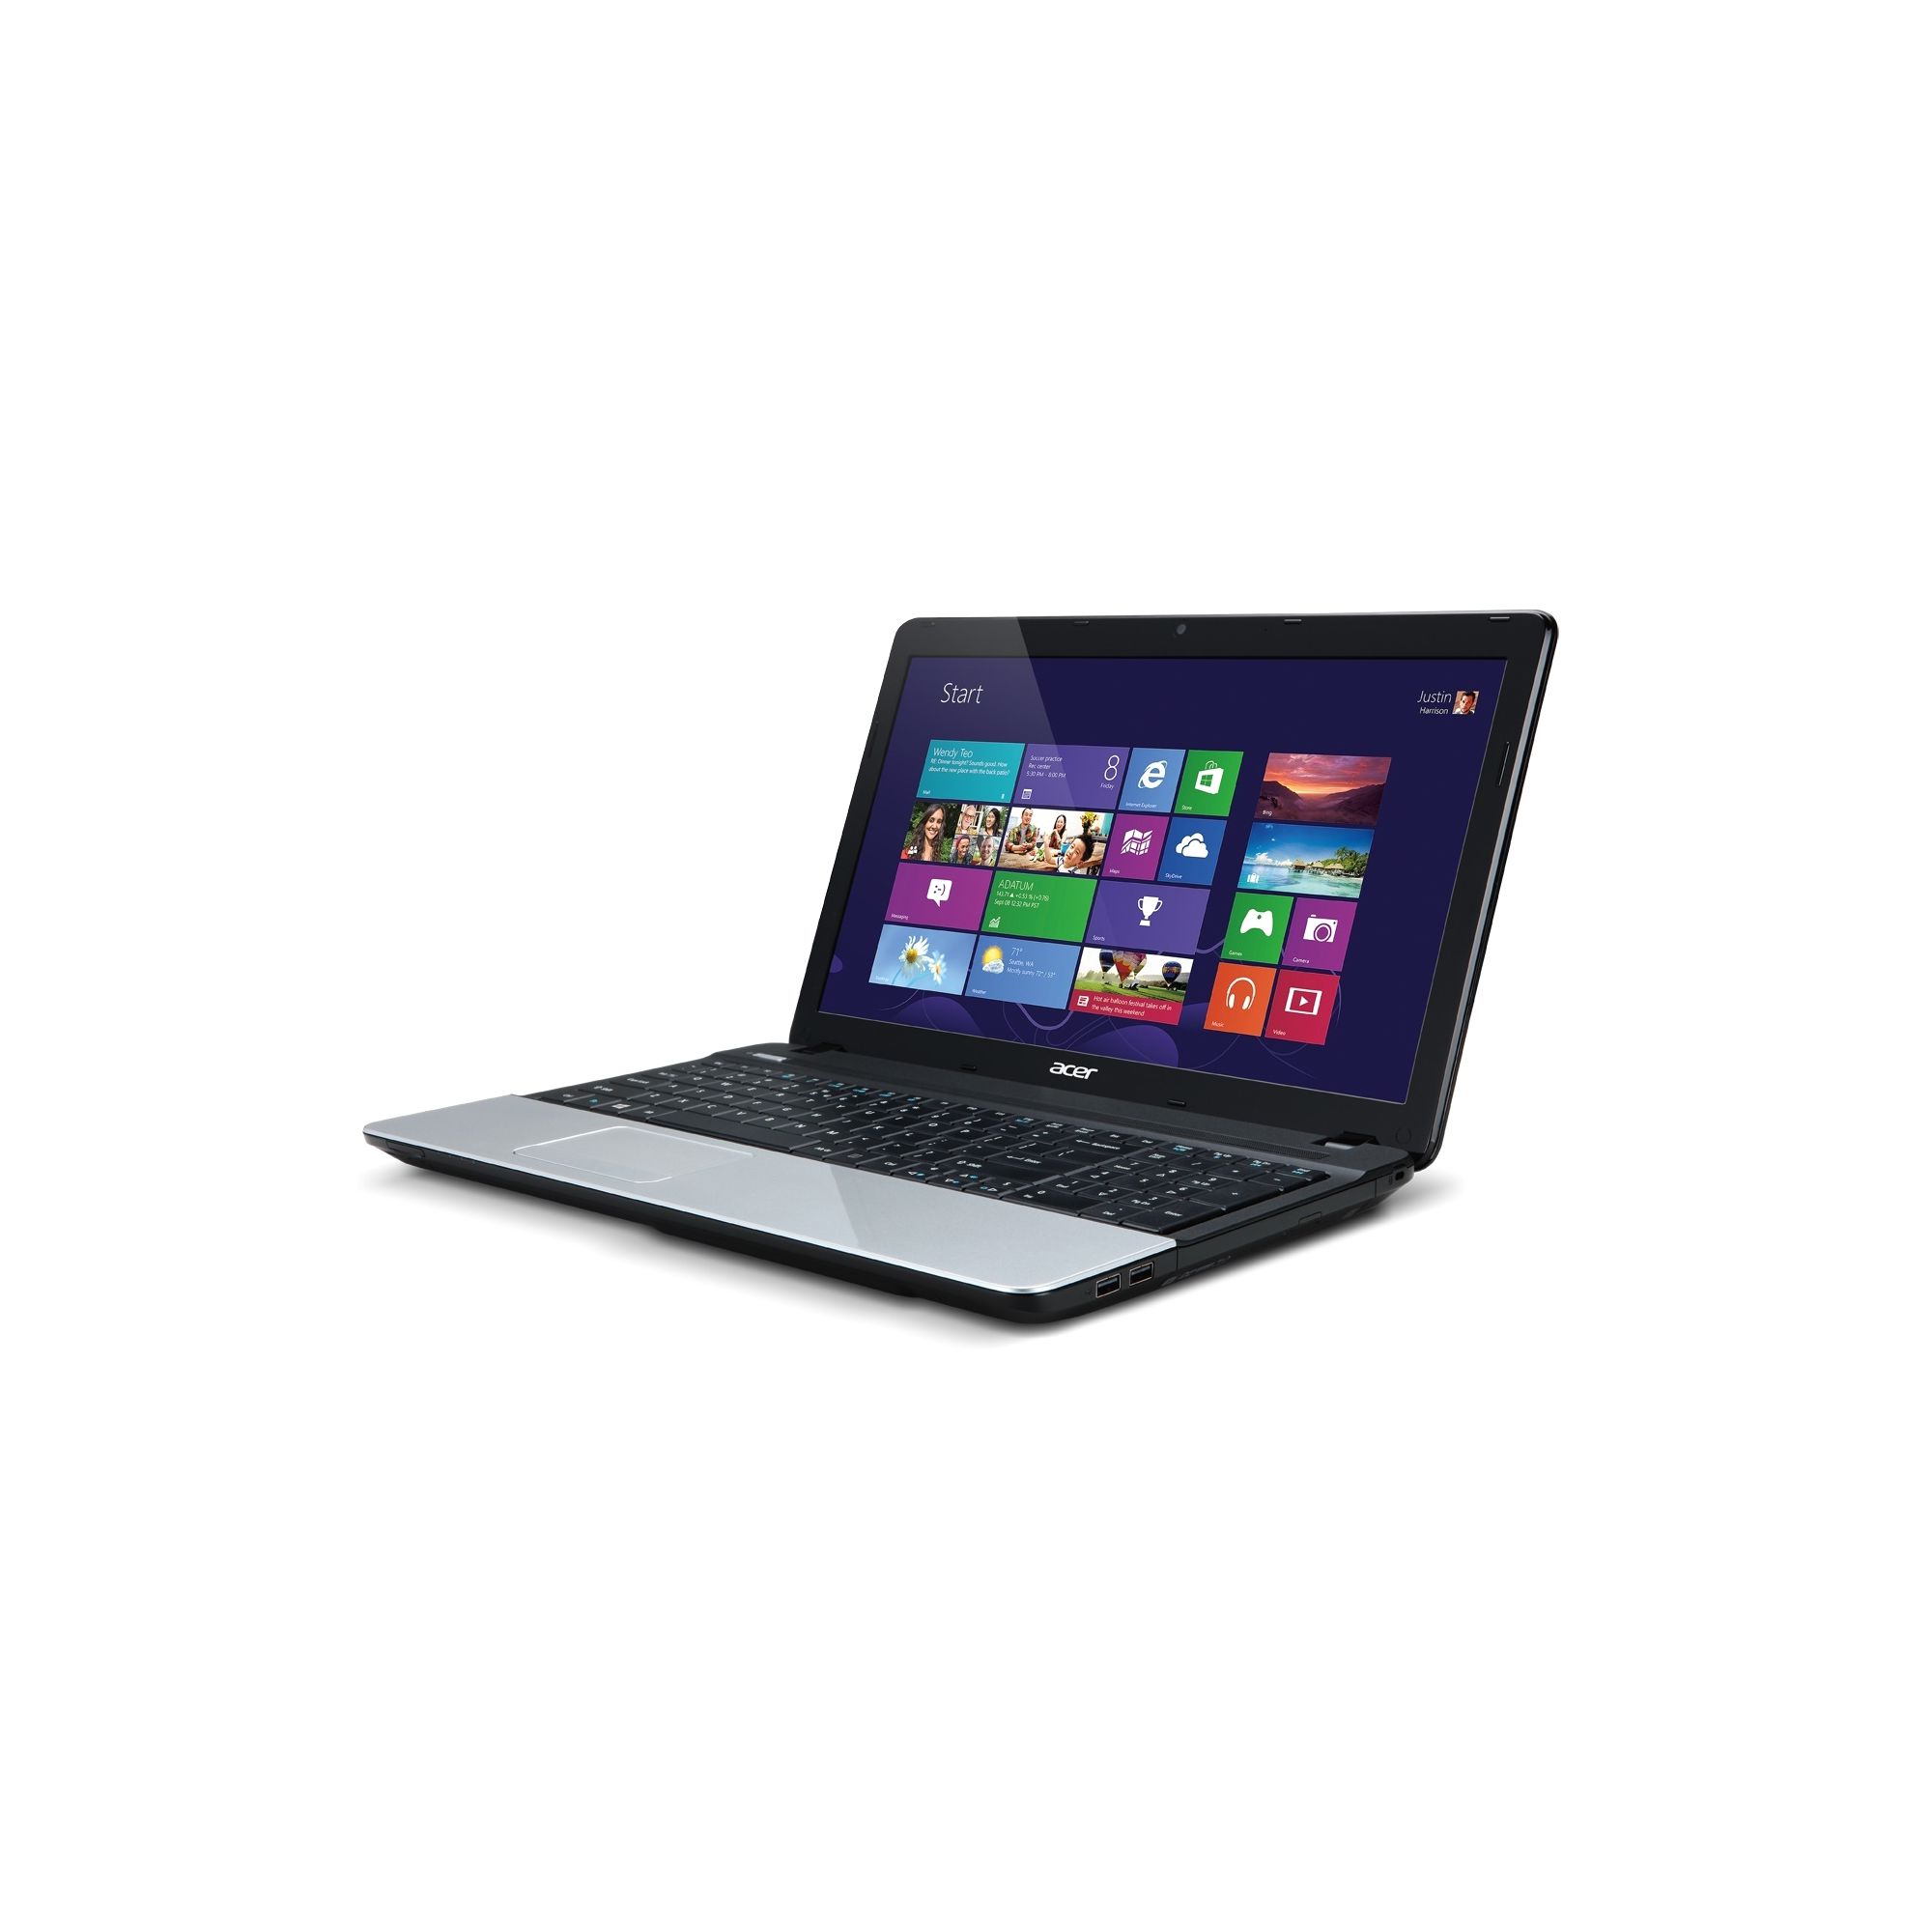 Acer Aspire E1-571 15.6 Notebook PC Core i3 2.5GHz, 8GB, 750GB DVD Writer